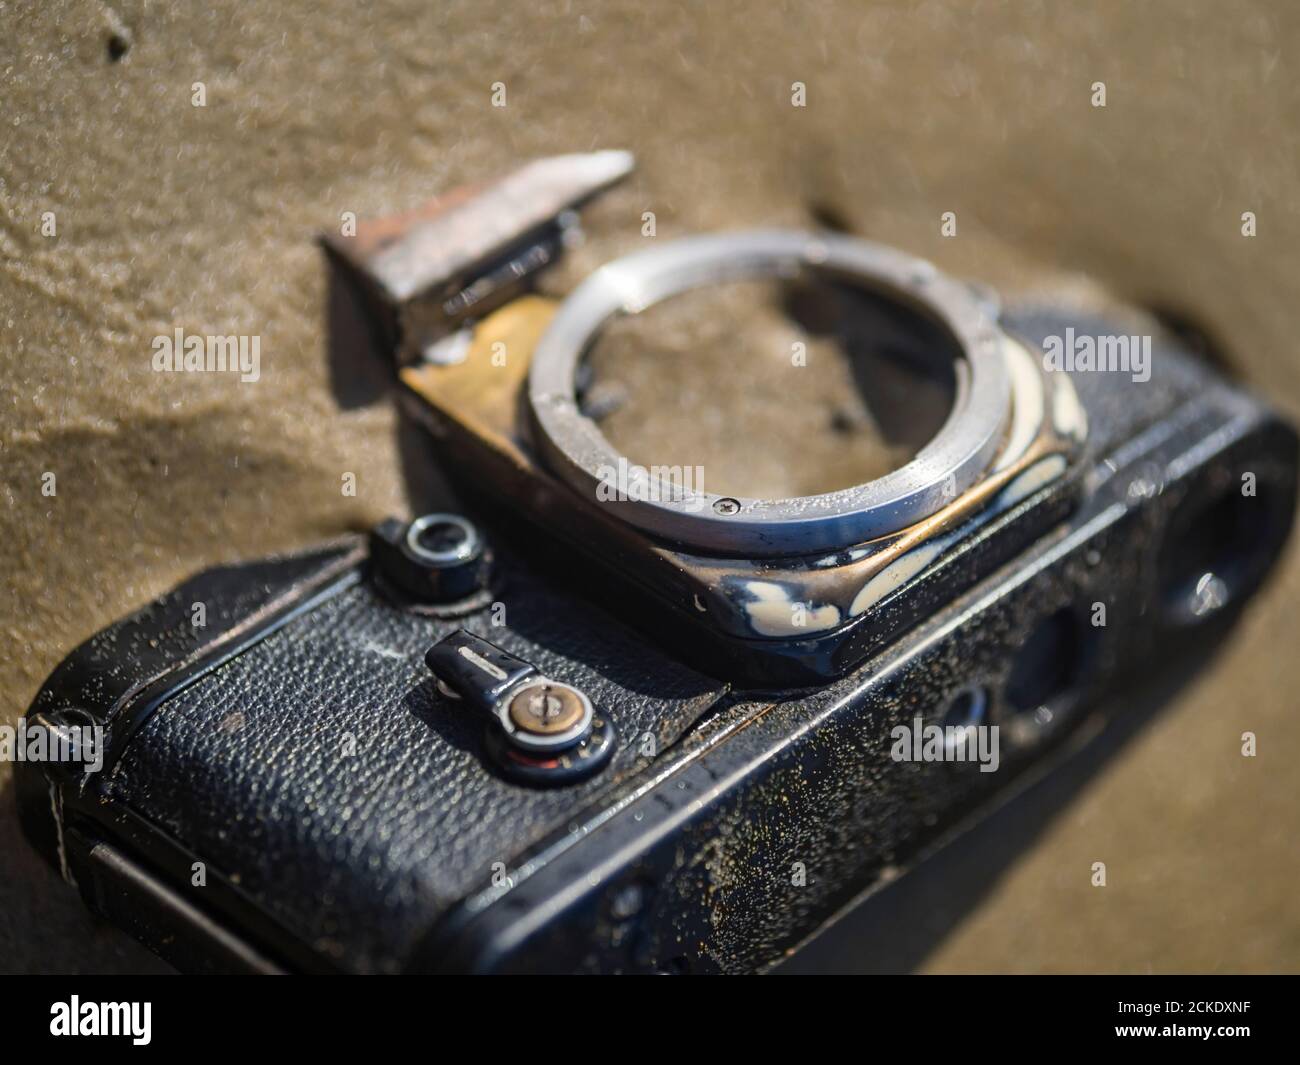 Nikon retro classic SLR film camera body on beach closeup close-up detail details crop cropped view Stock Photo